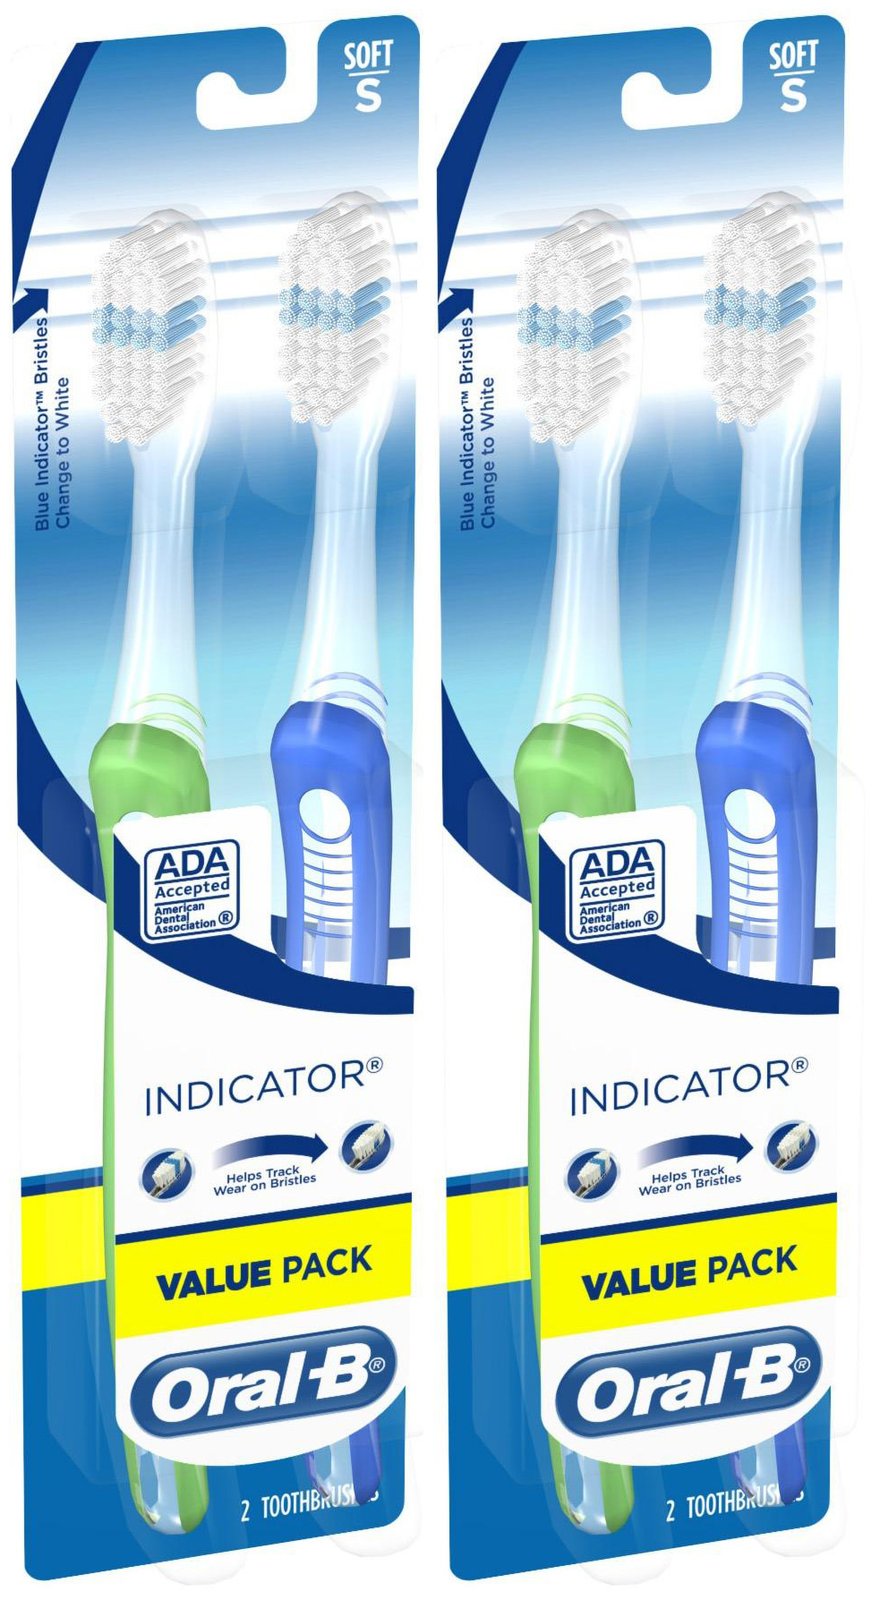 Oral B Indicator Contour Toothbrushes Just $0 49 Per Brush at CVS {No